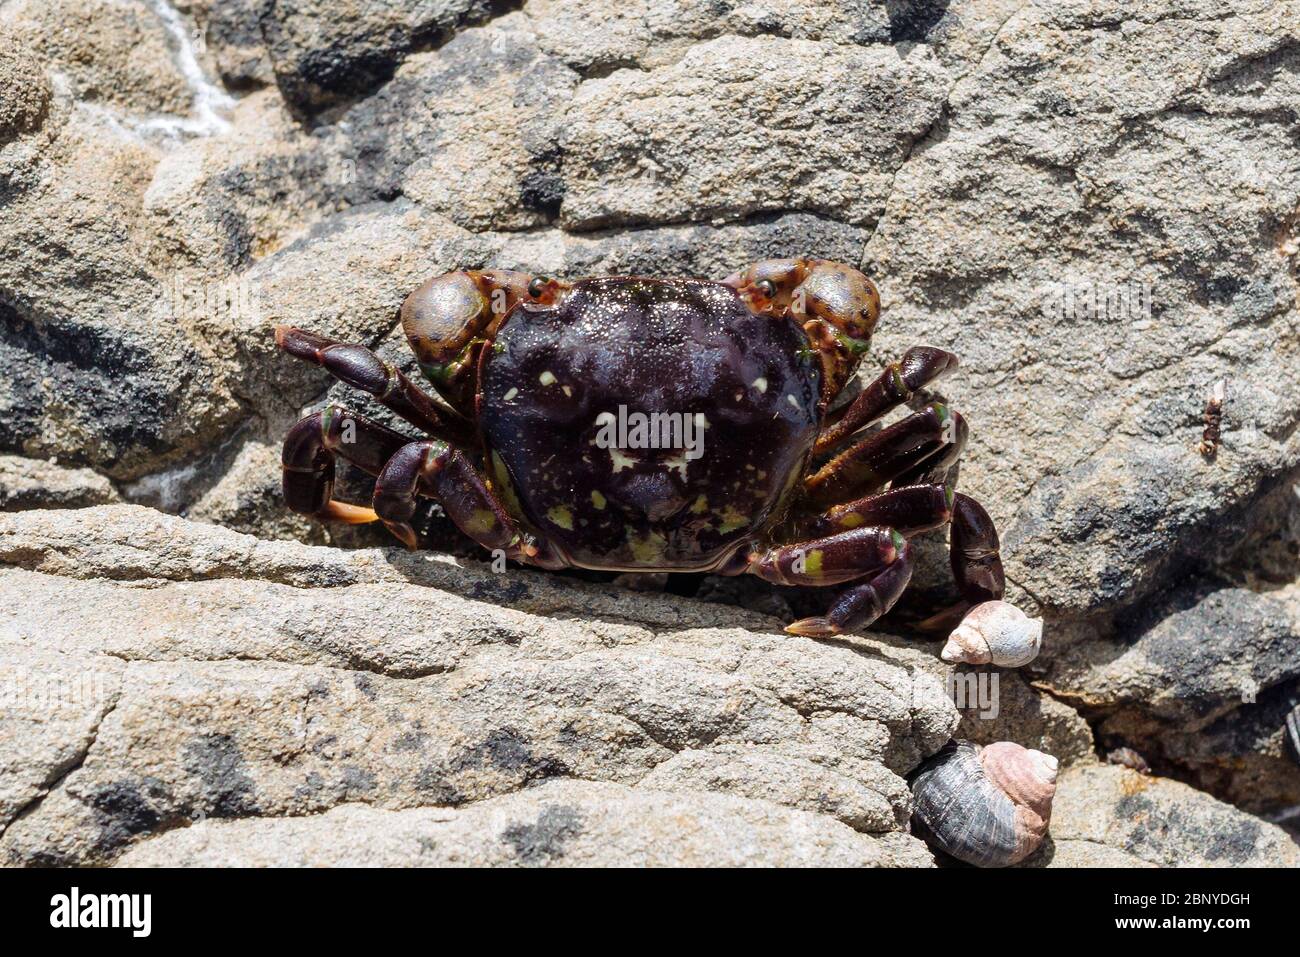 A purple shore crab (Hemigrapsus nudus) found in an intertidal zone in Haida Gwaii, British Columbia, Canada Stock Photo